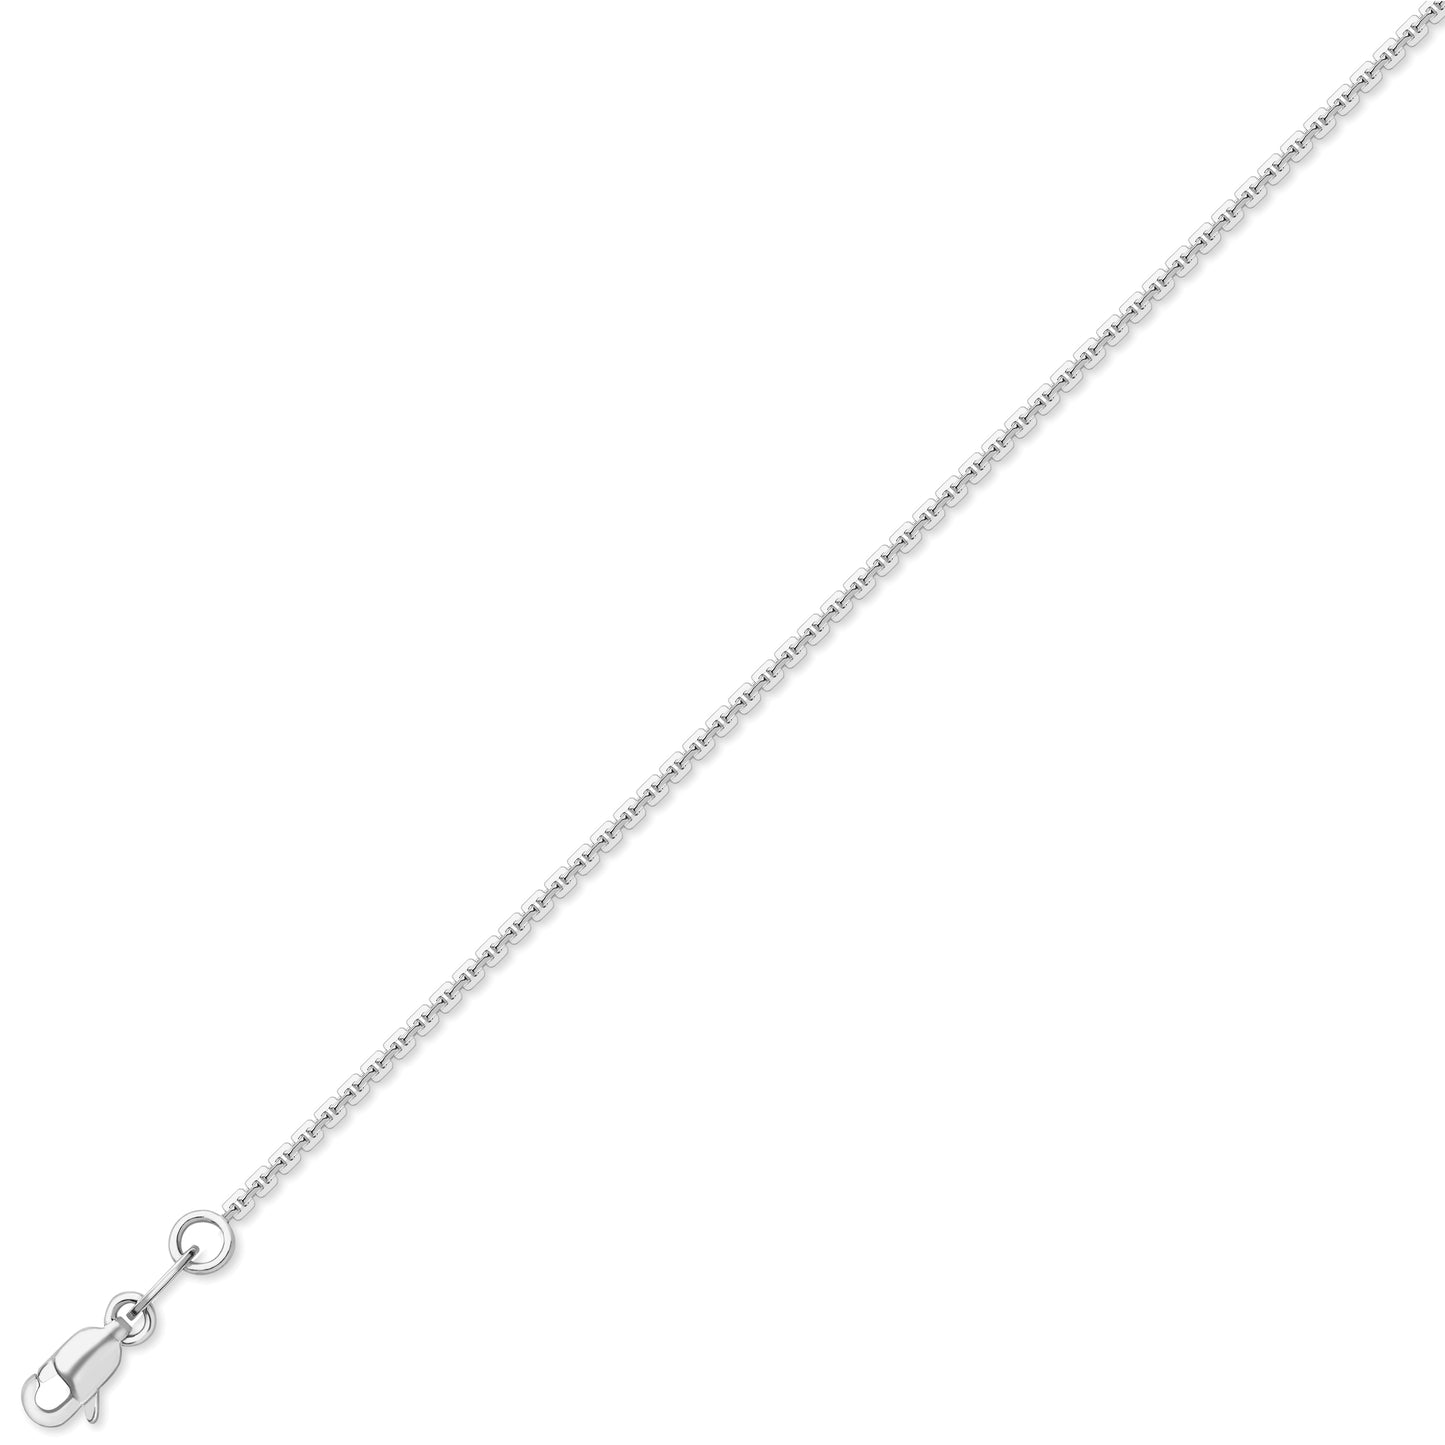 9ct White Gold  Square Edge Trace Pendant Chain Necklace 1.2mm - CNNR02755